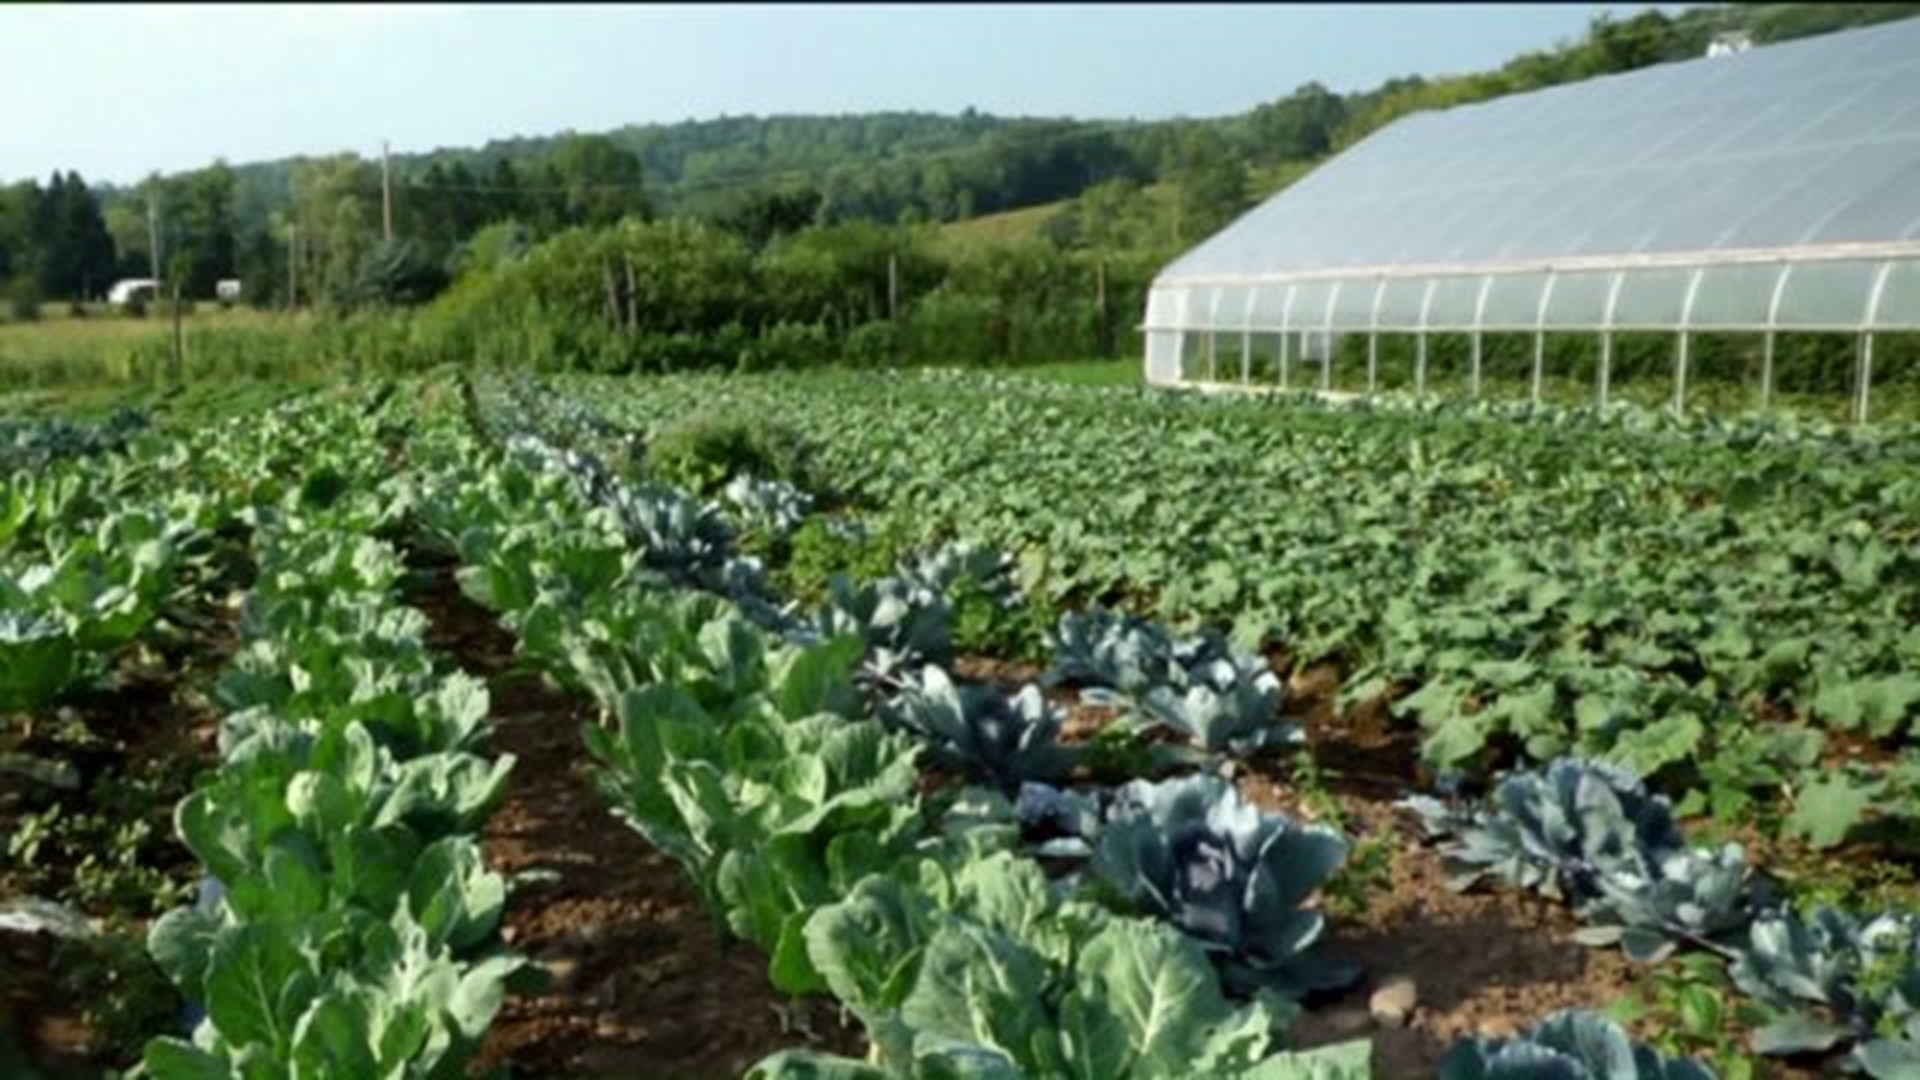 For Sale: Organic Farm in Wayne County